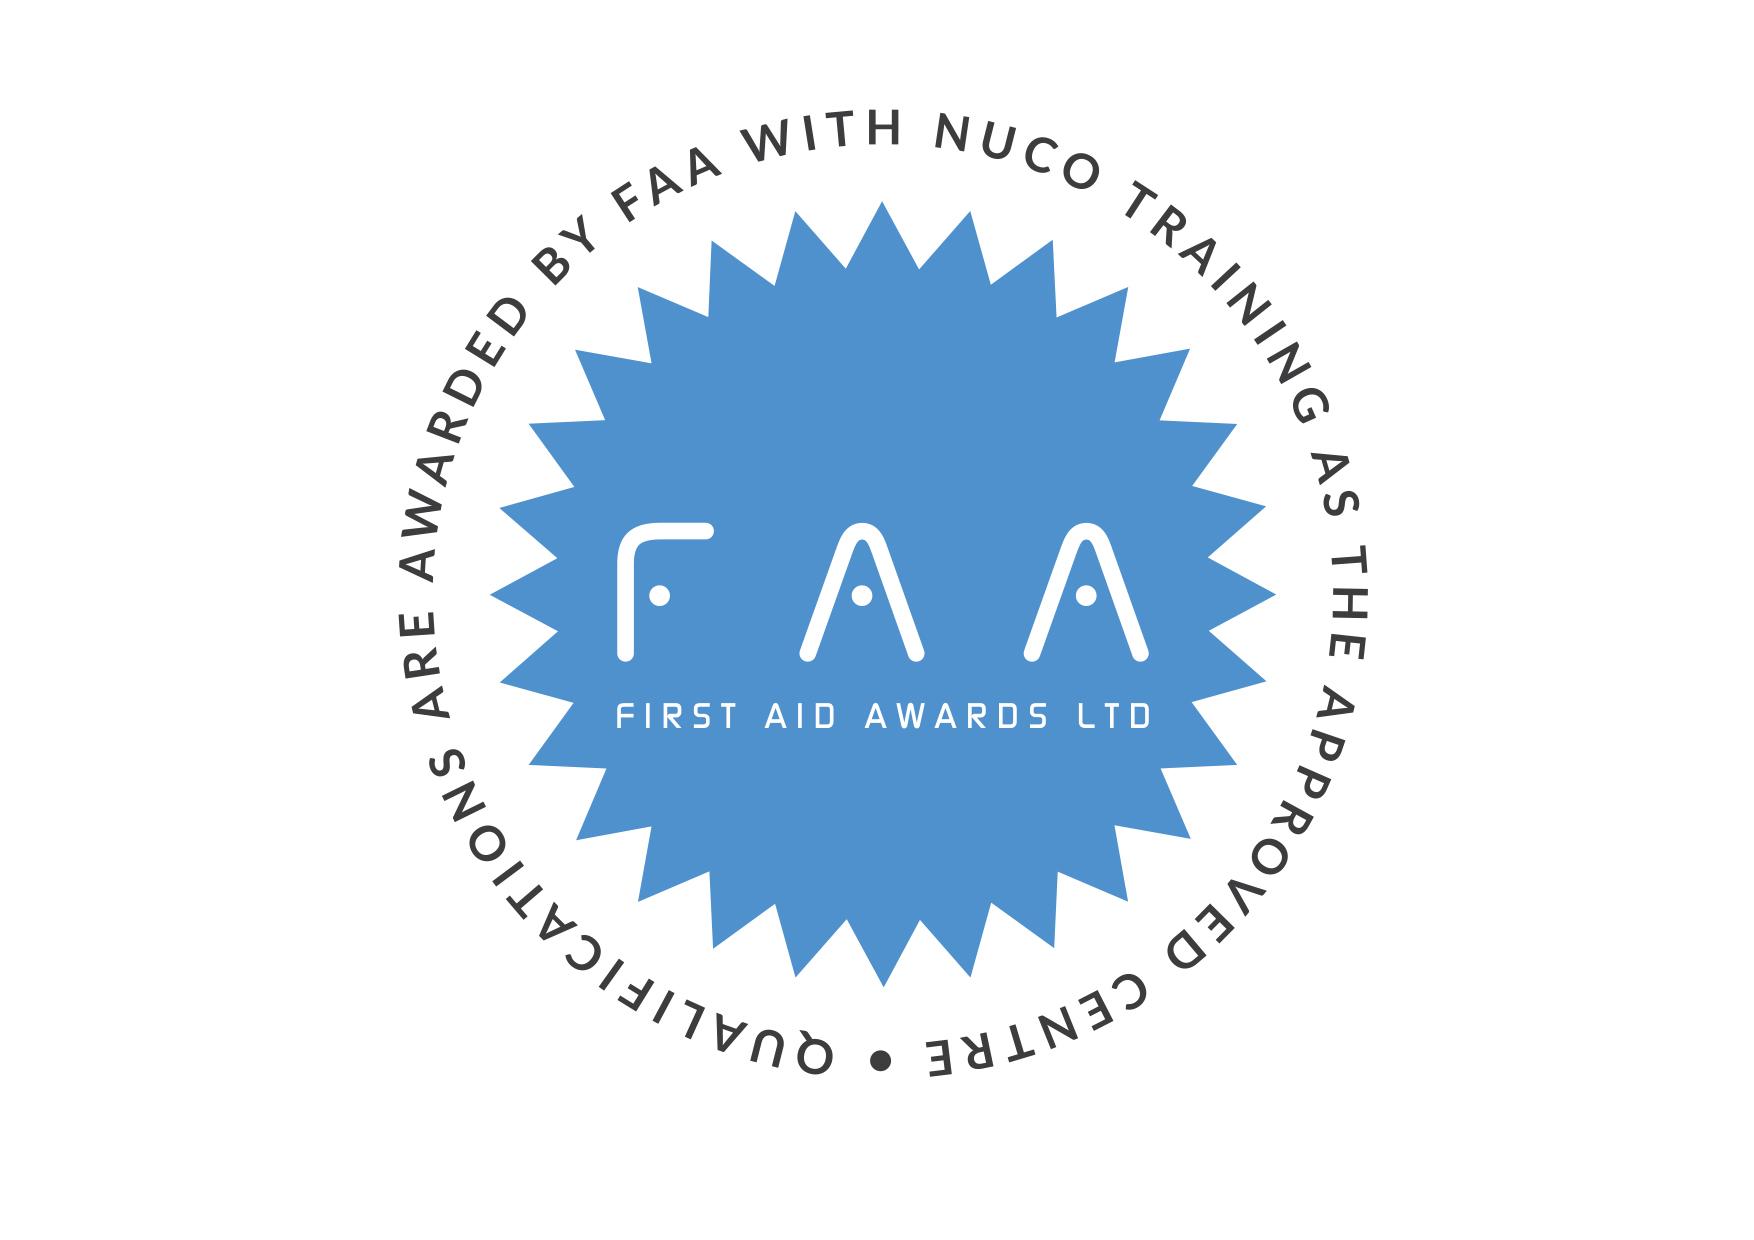 Nuco training first aid badge logo